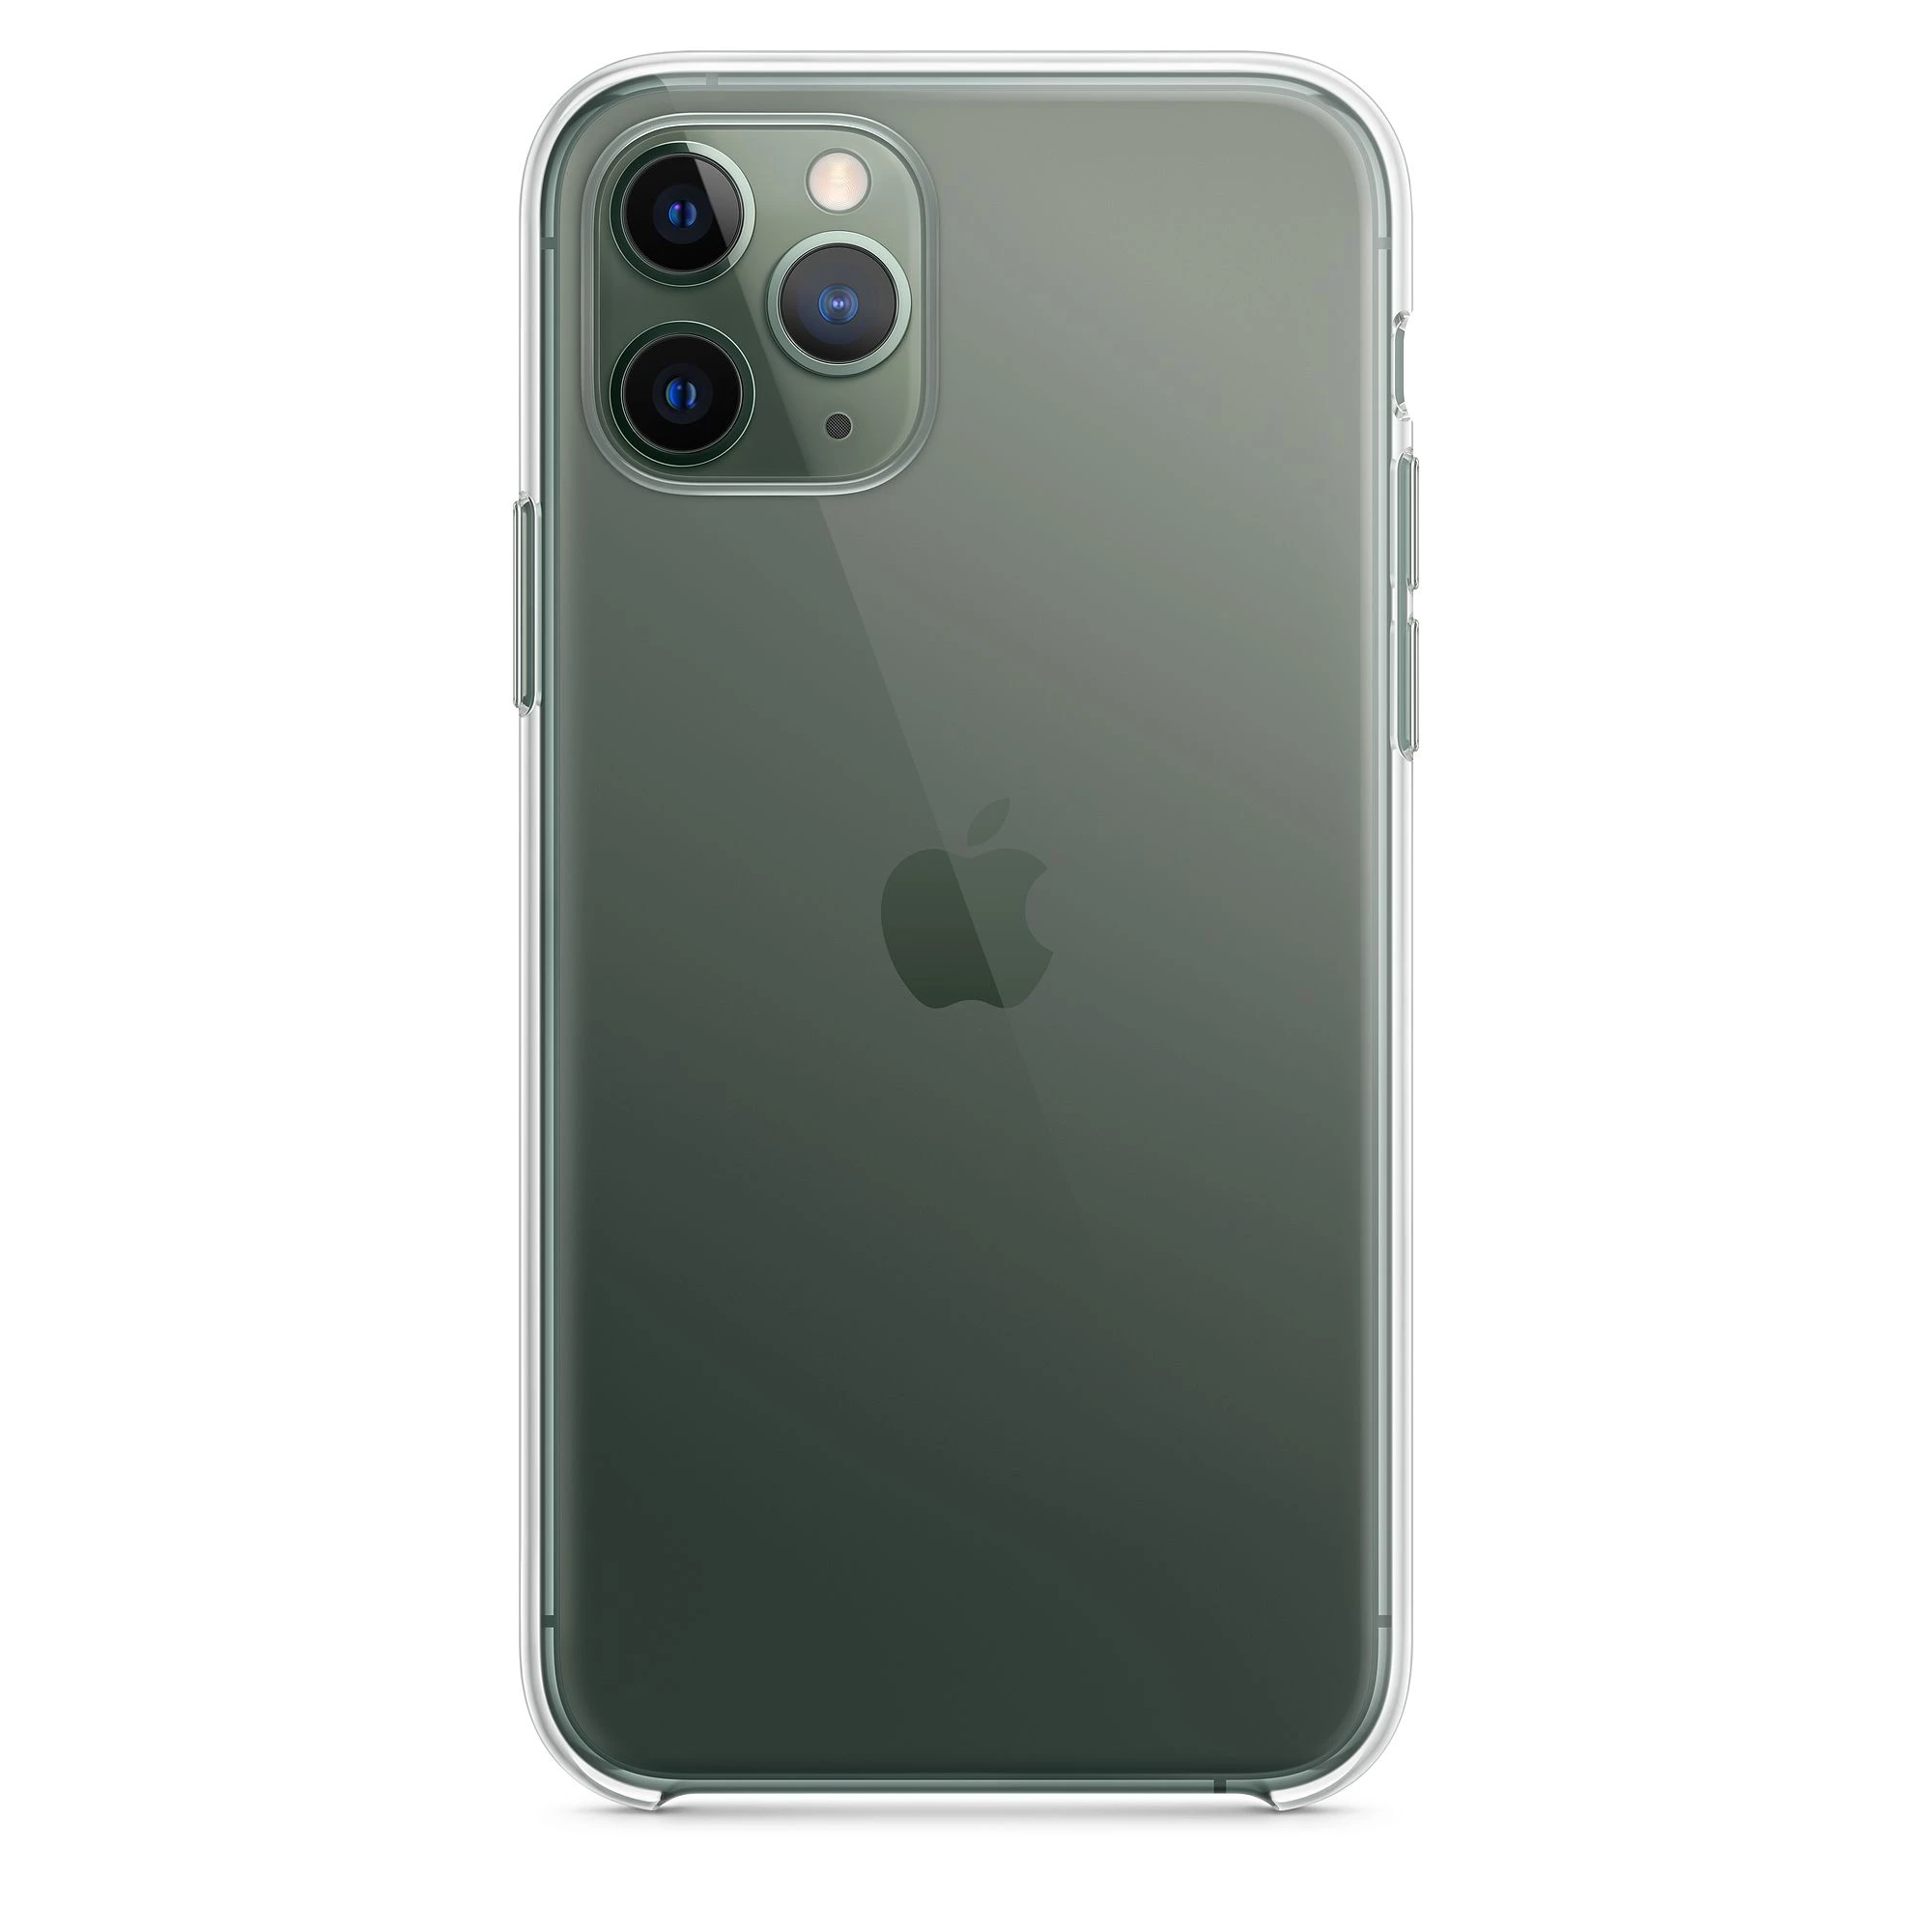 Чохол Apple iPhone 11 Pro Max Clear Case (MX0H2)